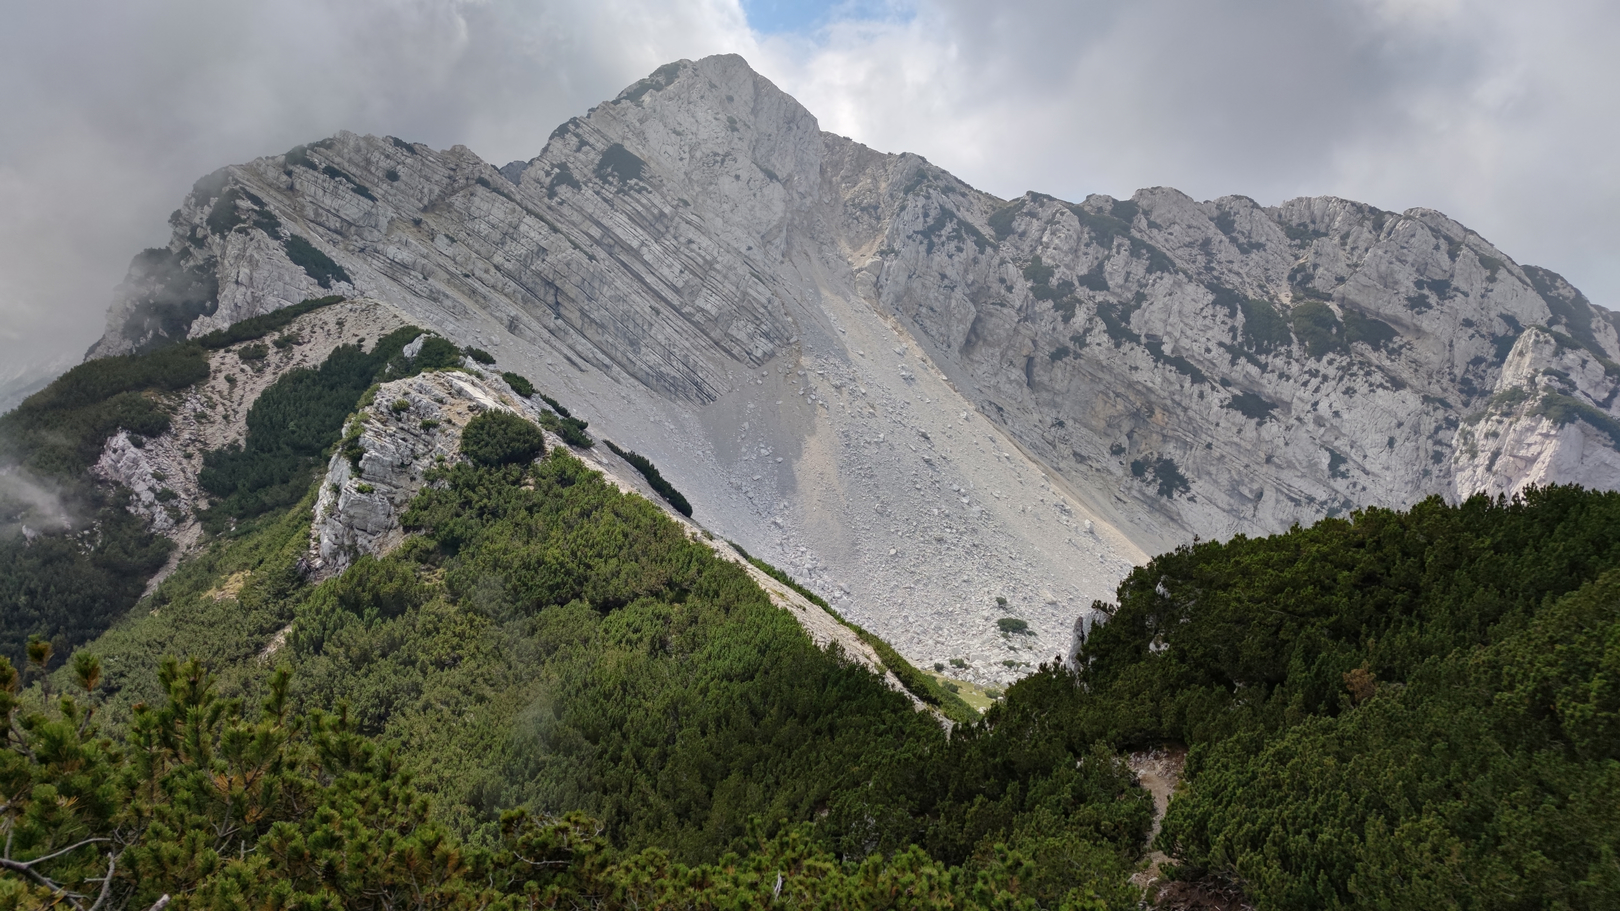 Wanderung entlang des Monte Baldo Bergrücken